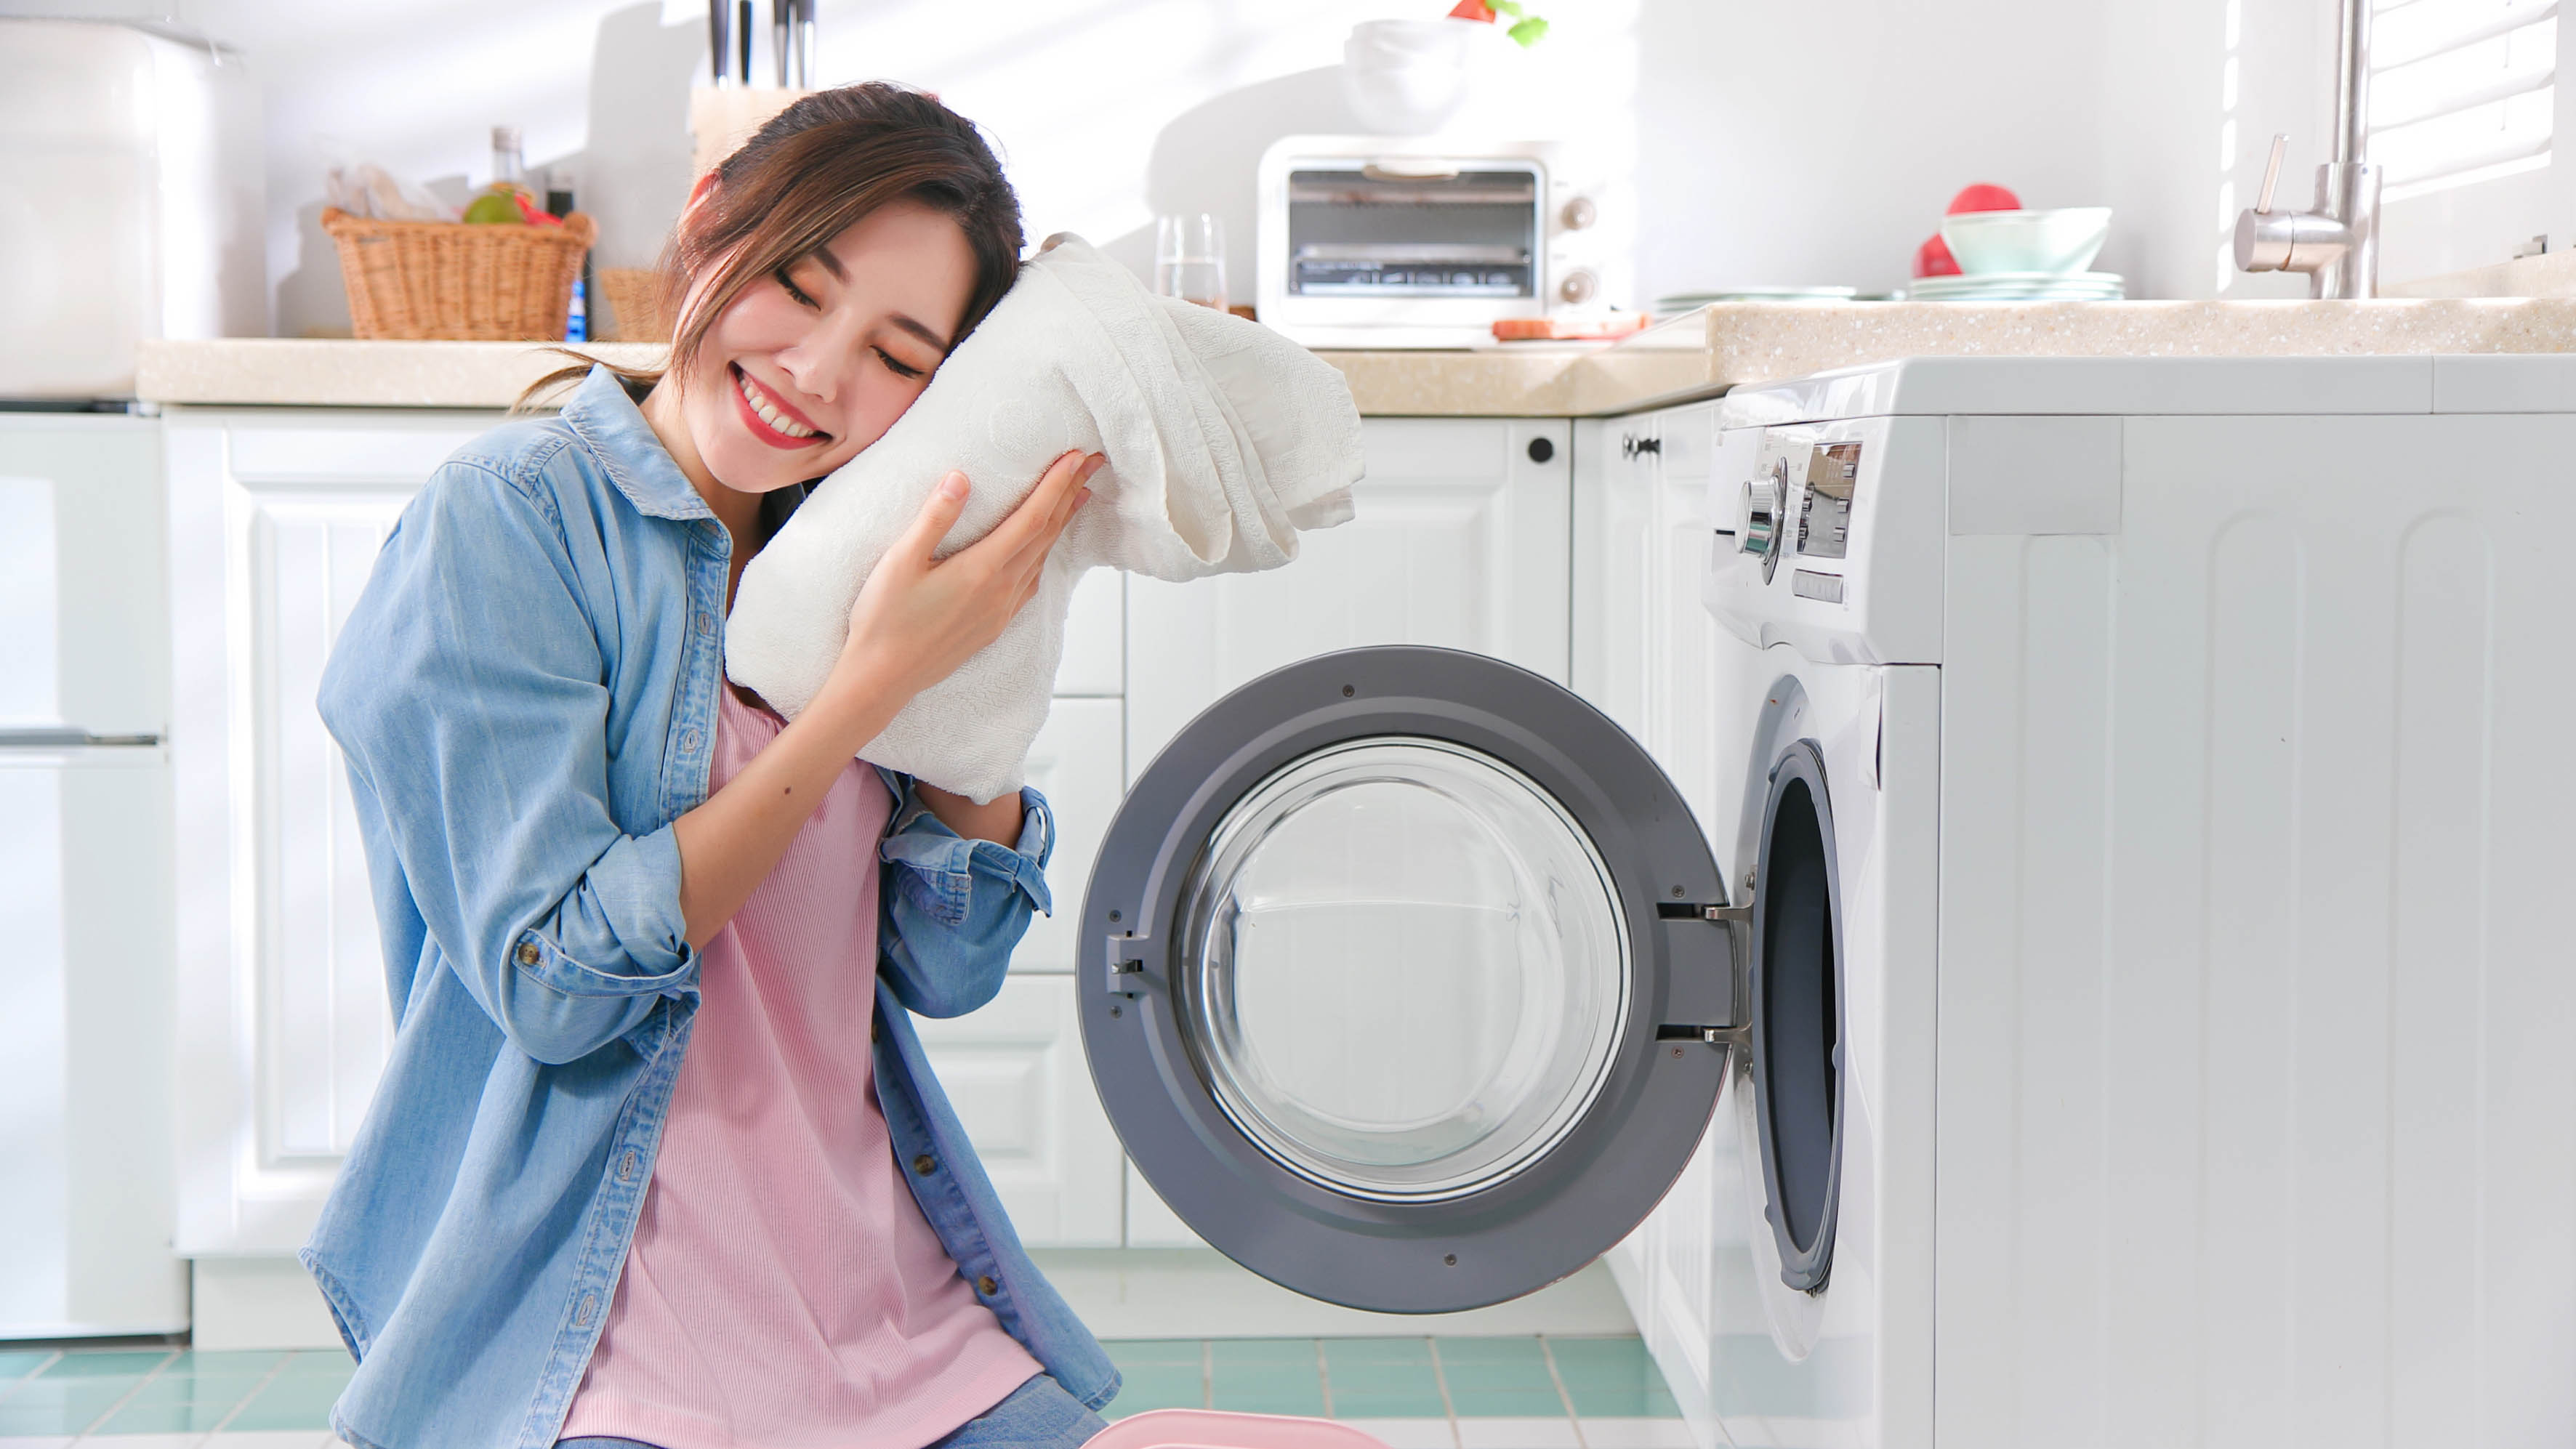 How to Make Towels Soft Again